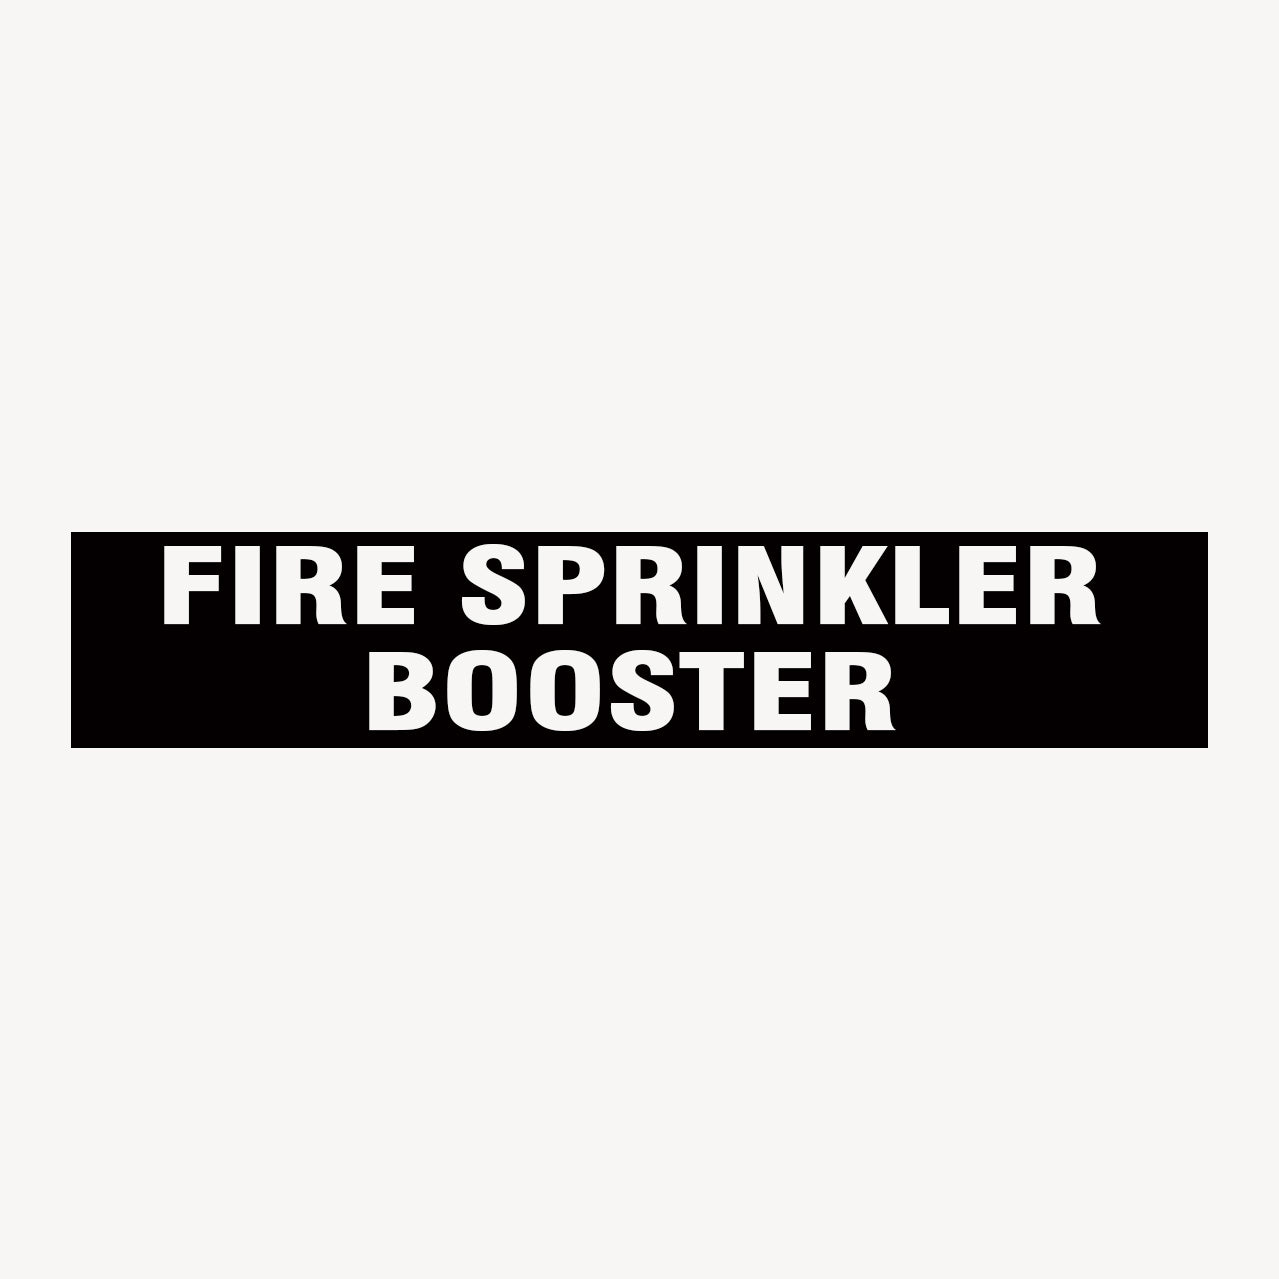 FIRE SPRINKLER BOOSTER SIGN - statutory signs